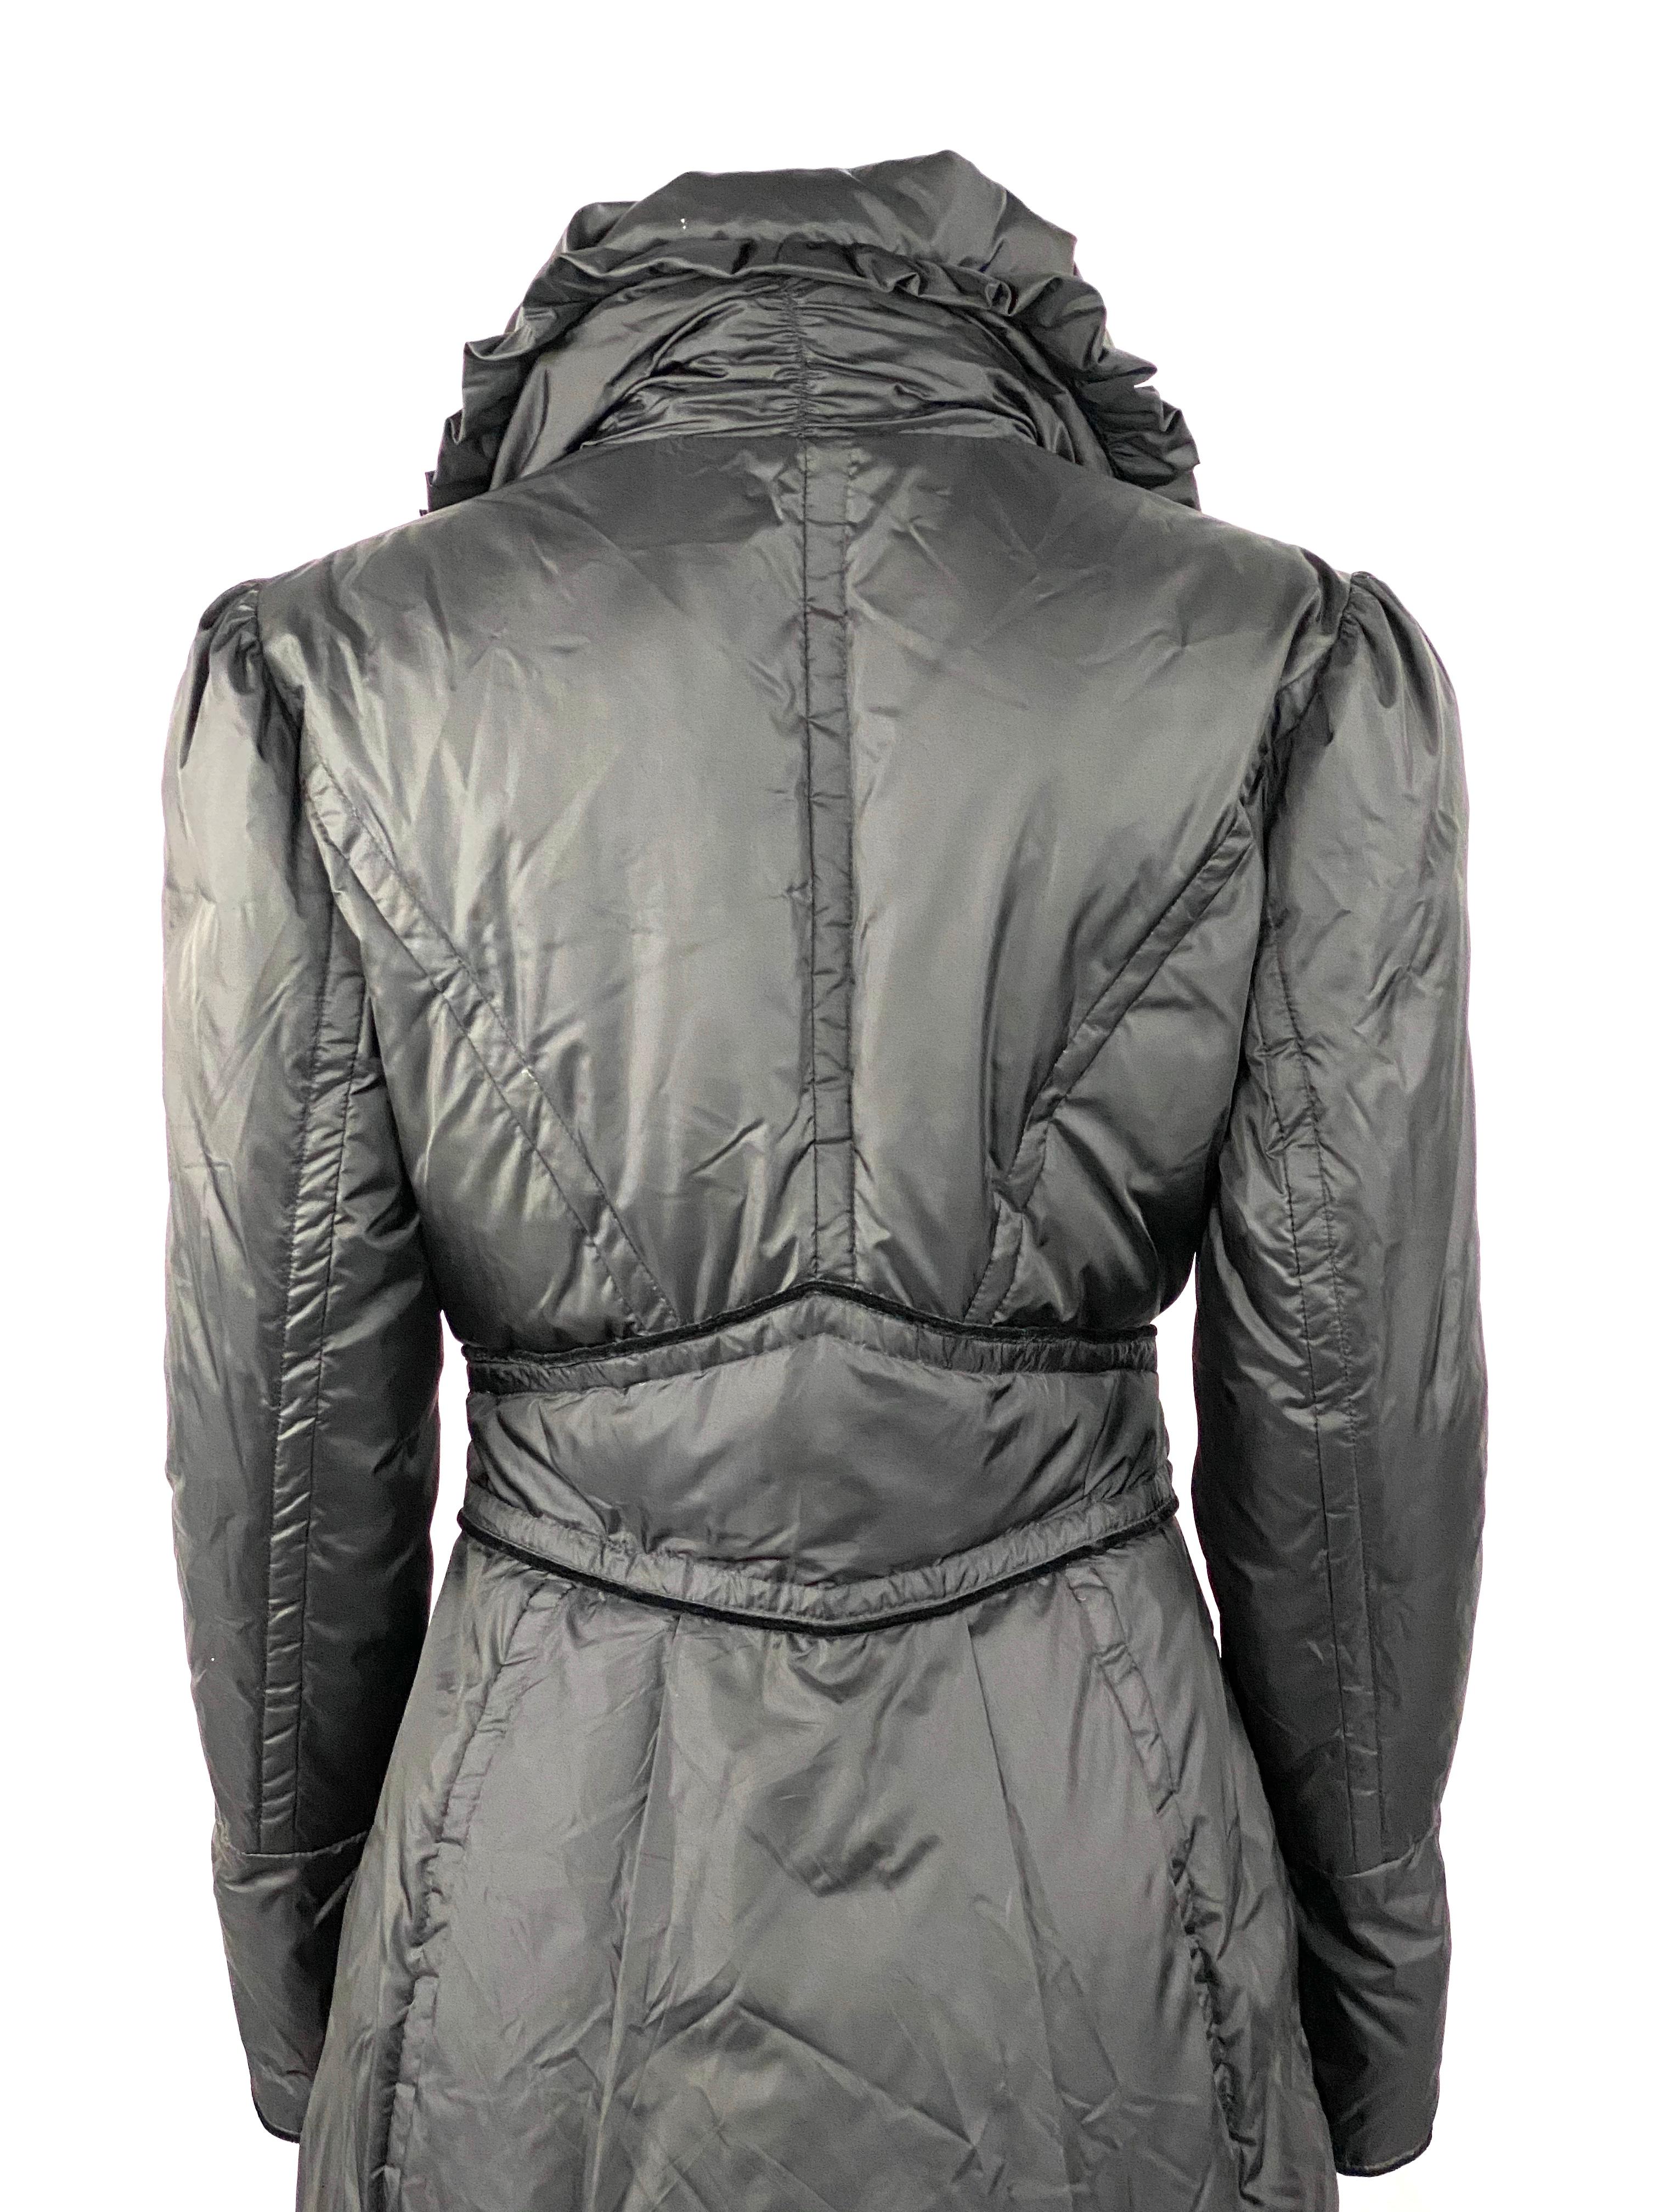 Emanual Ungaro Black Goose Dawn Long Puffer Jacket Coat Size 40  6